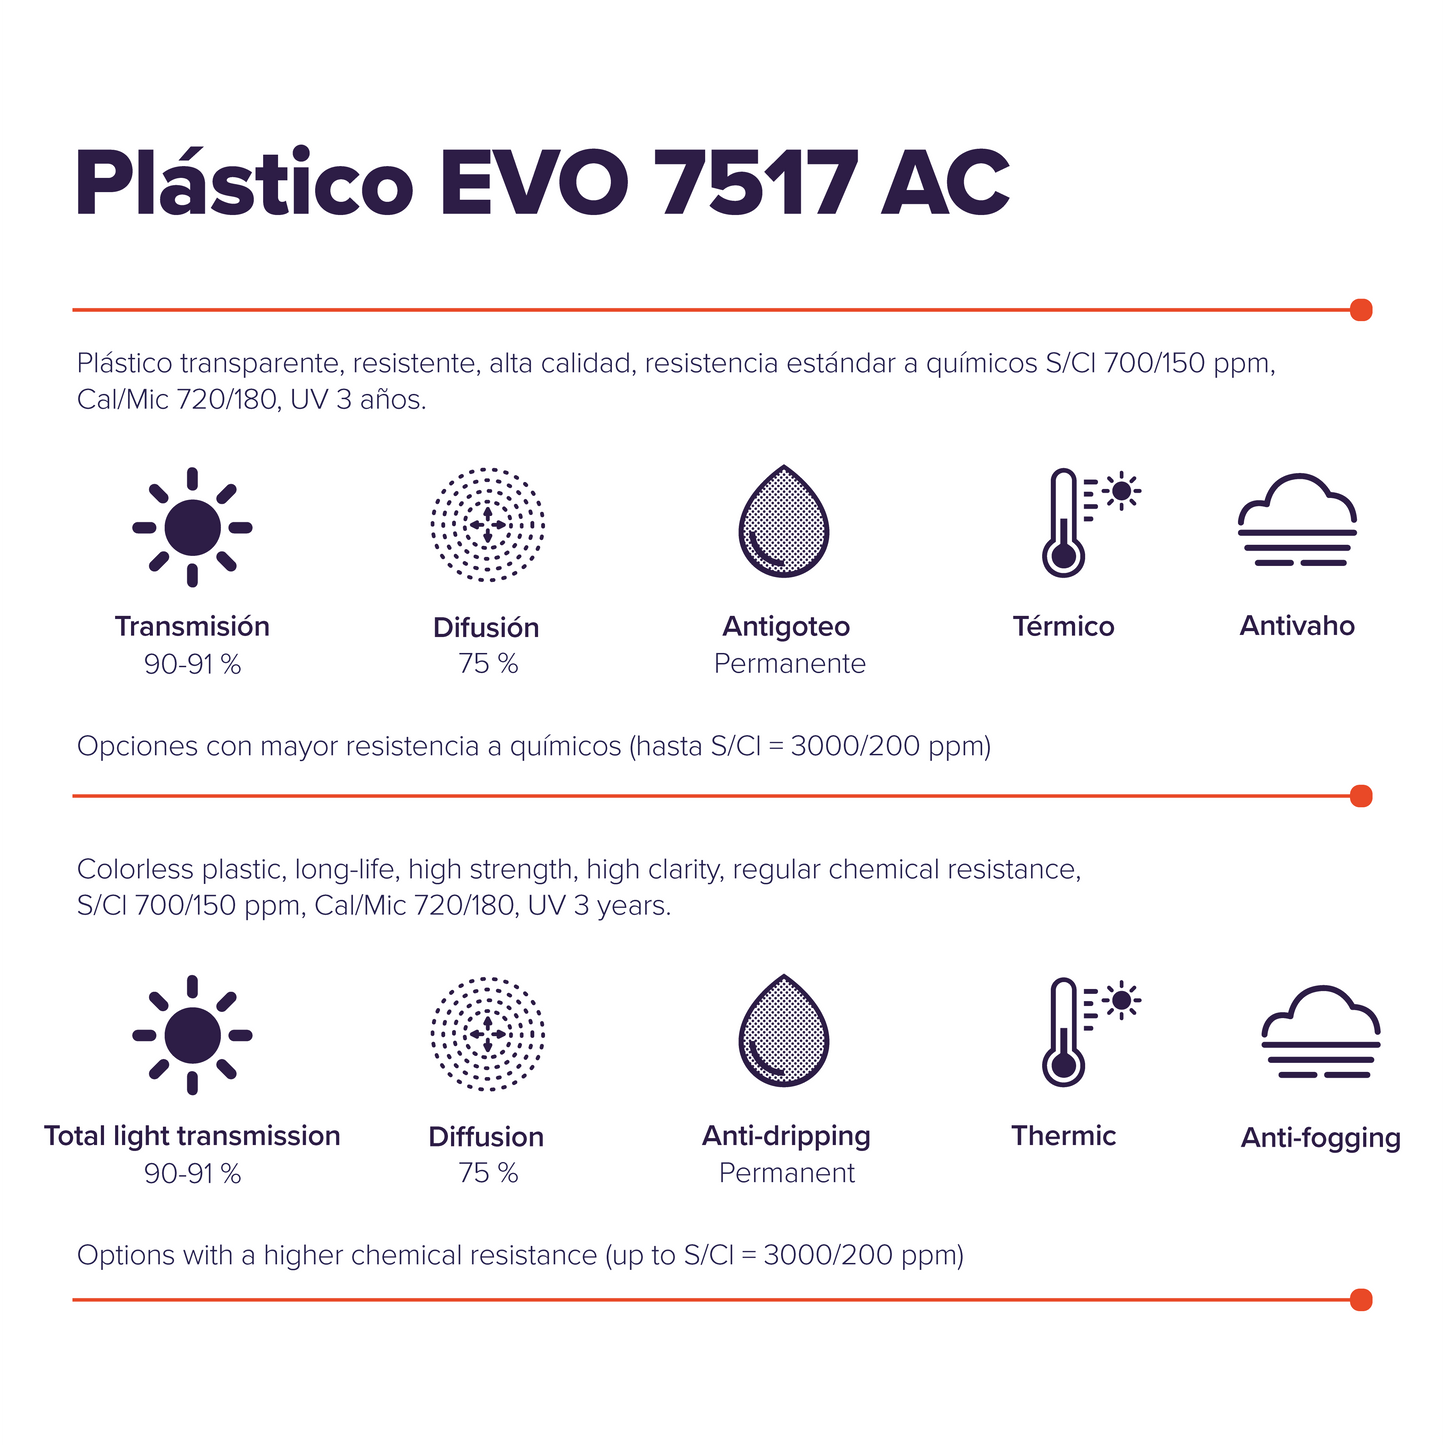 Plastic EVO 7517 AC